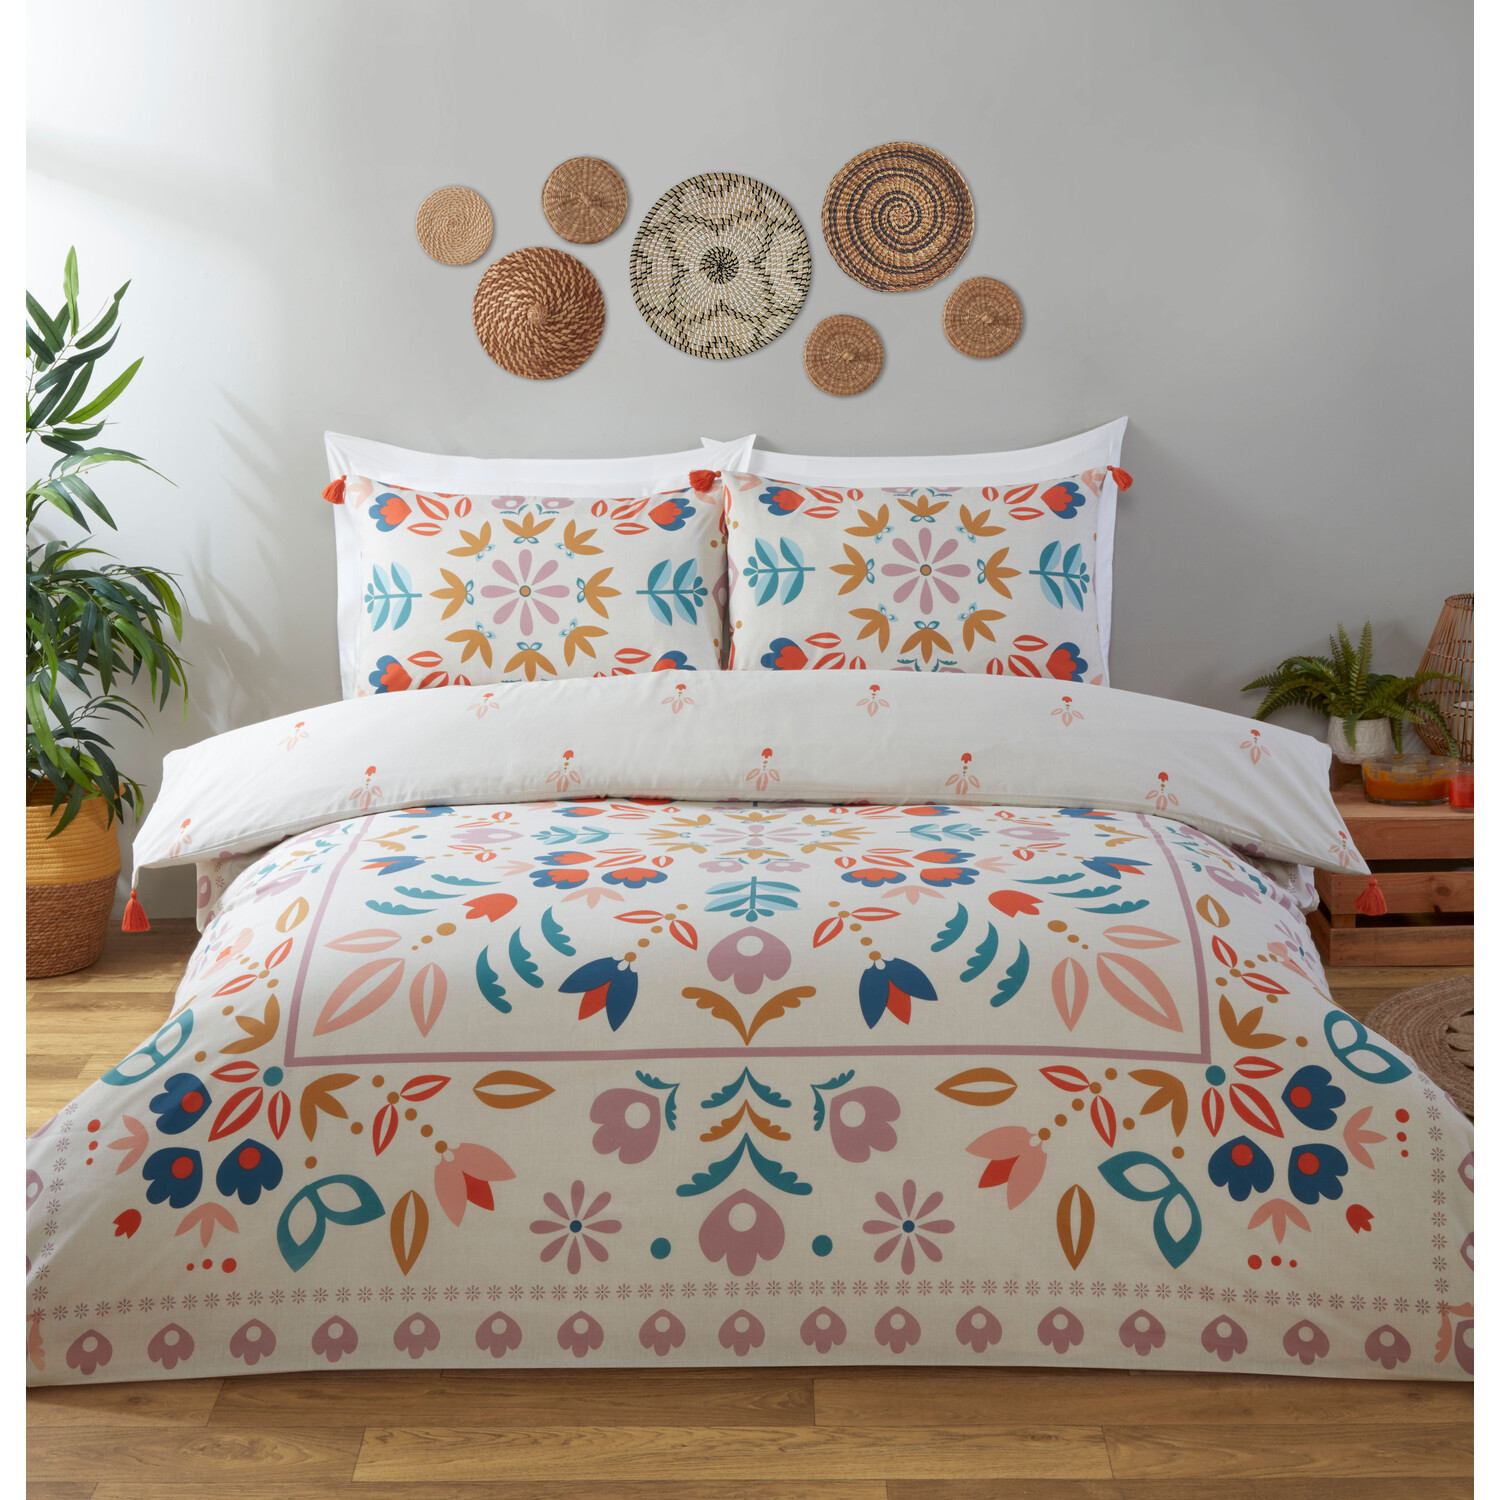 Amari Floral Duvet Cover and Pillowcase Set - King Image 1